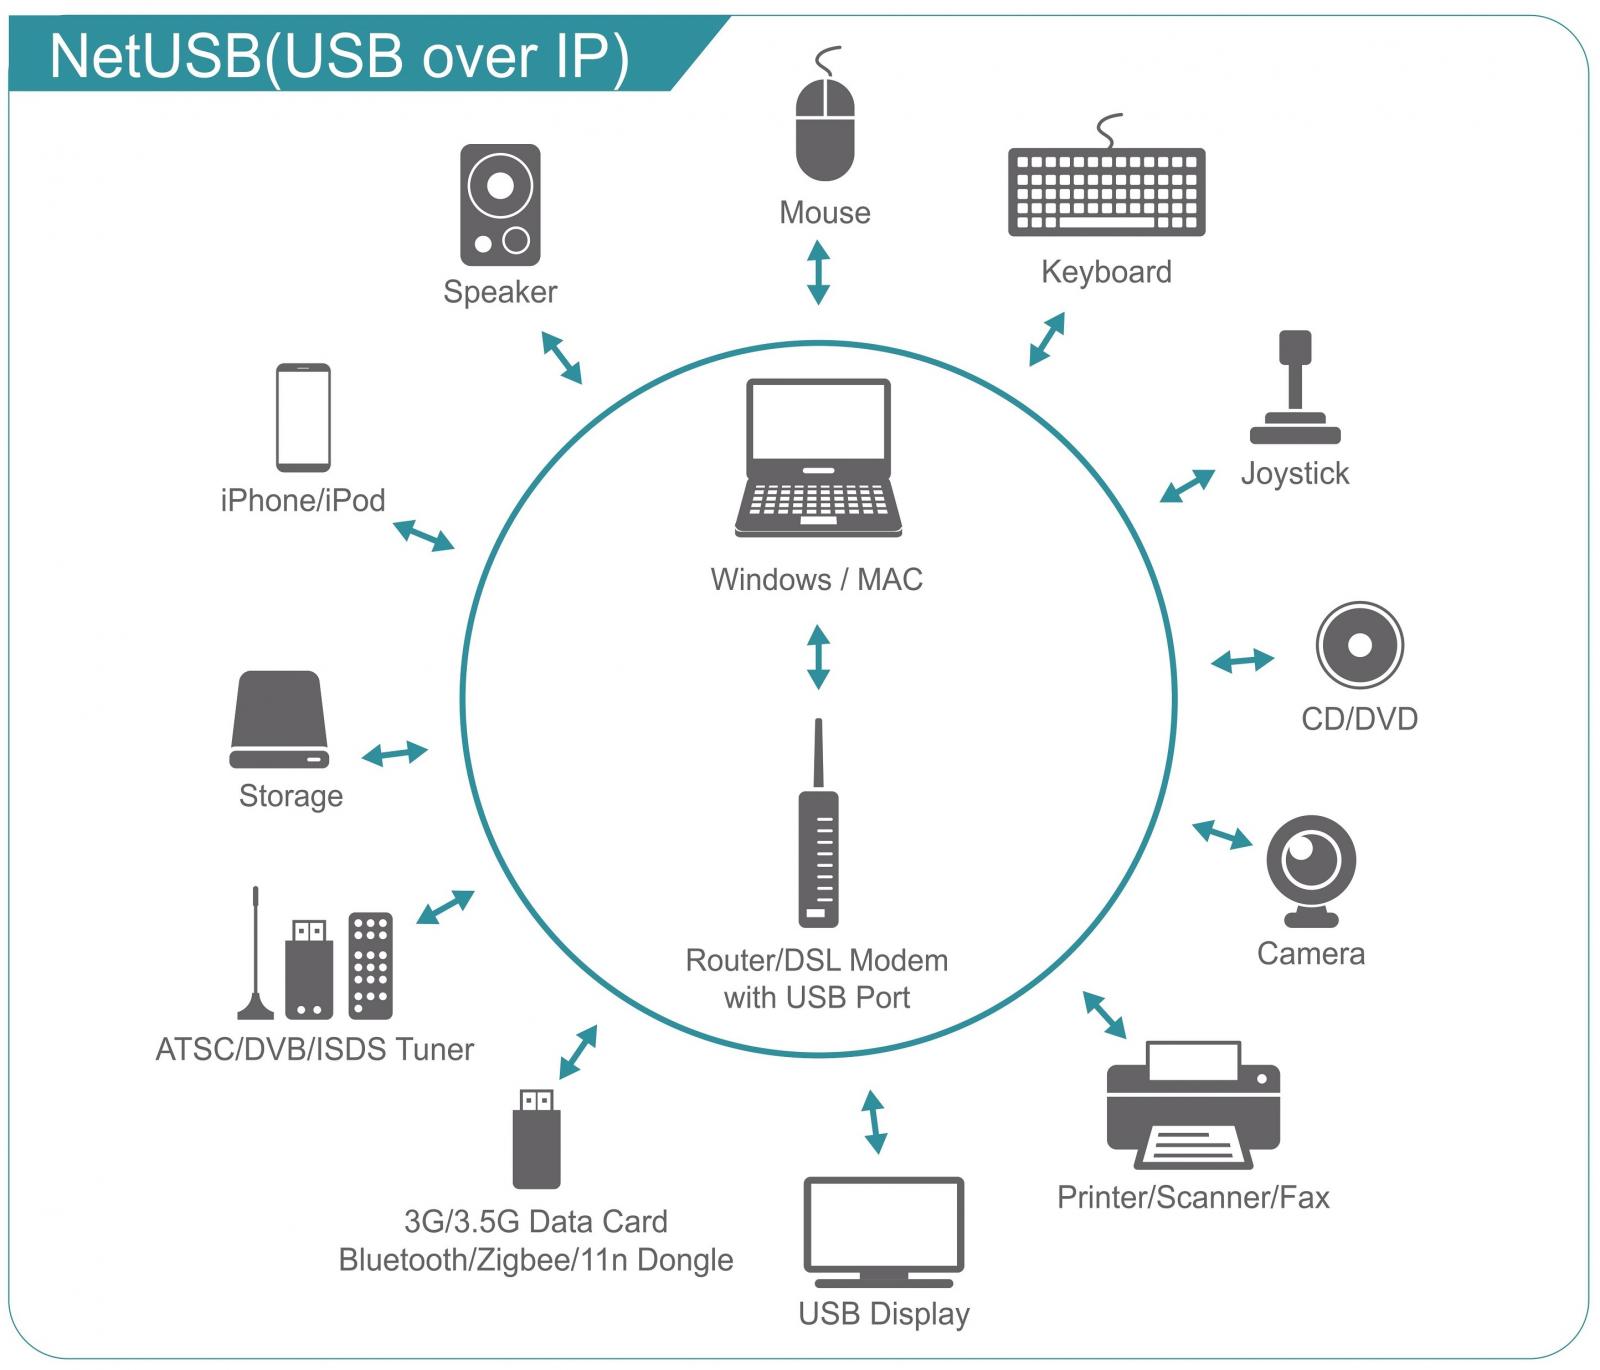 NetUSB operational diagram